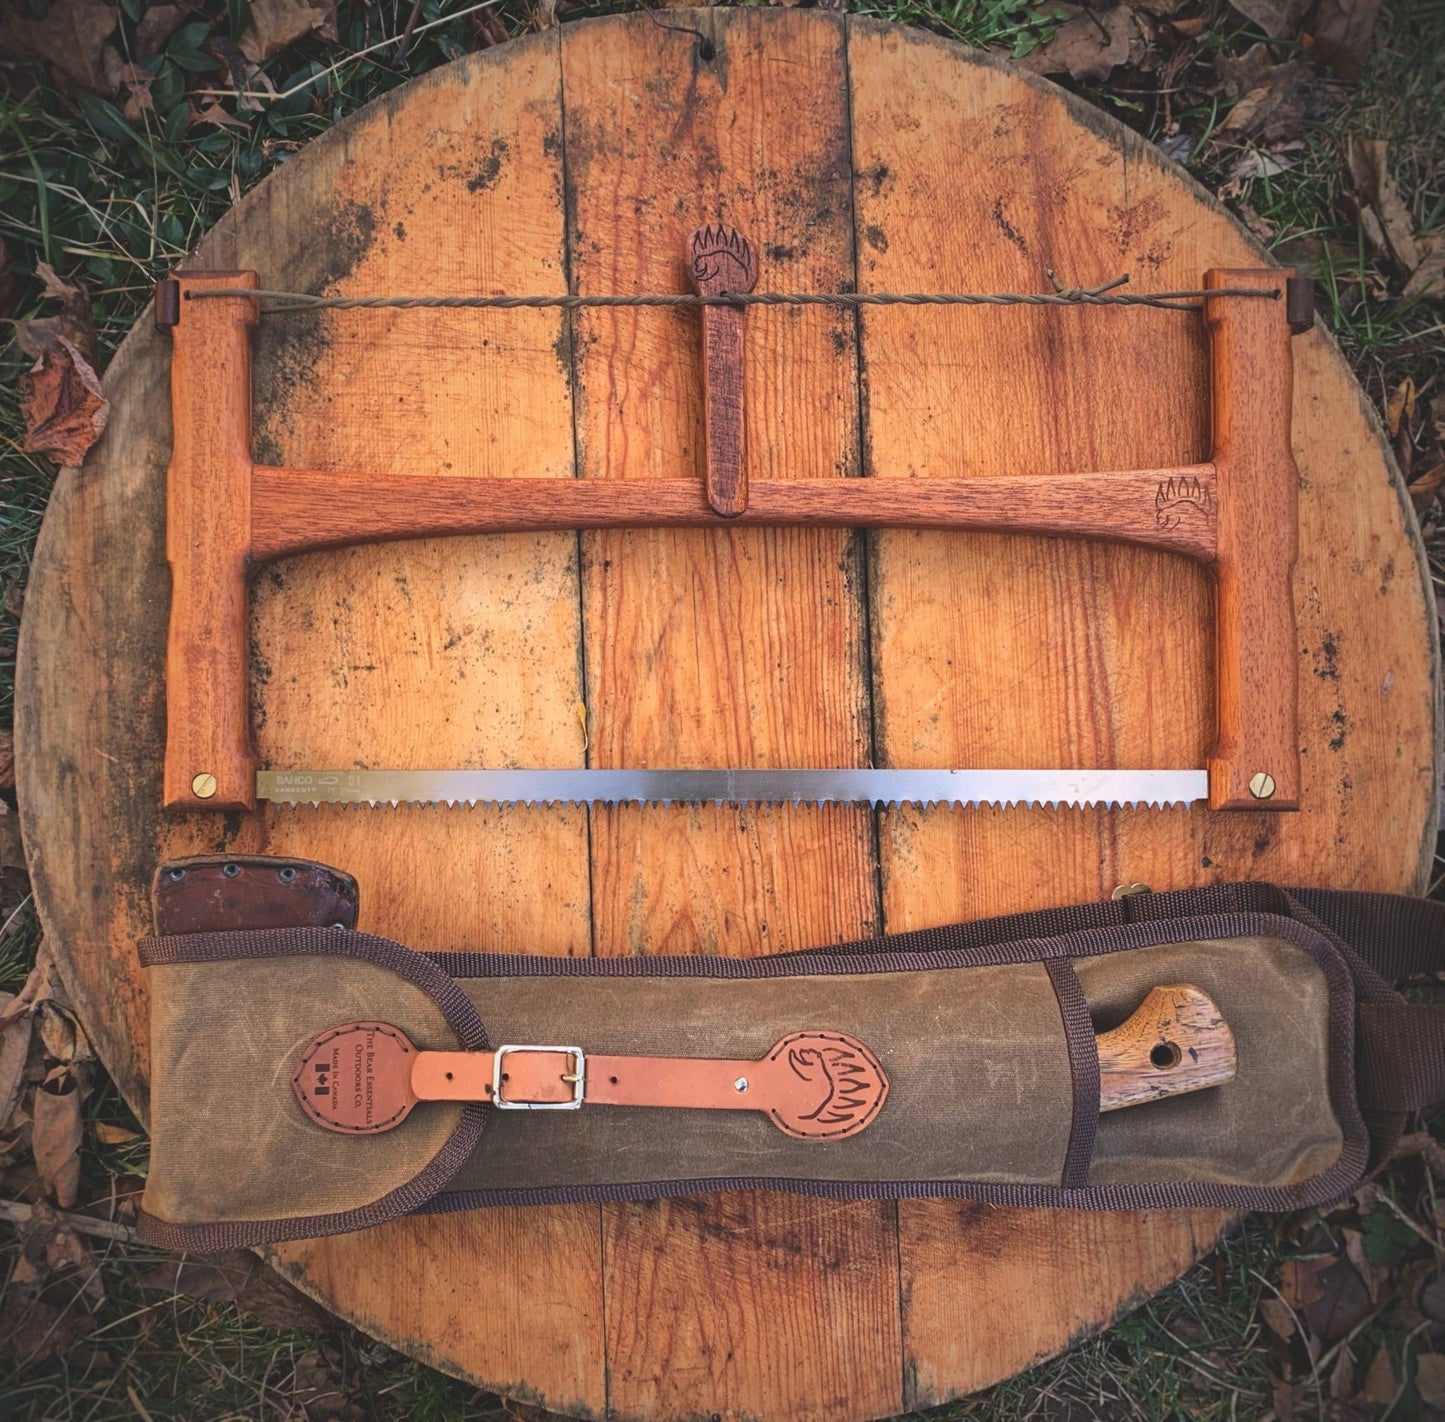 The Original Bucksaw - The Bear Essentials Outdoors Co., Saw N' Axe Sling [Brown], Standard Bucksaw Engraving,